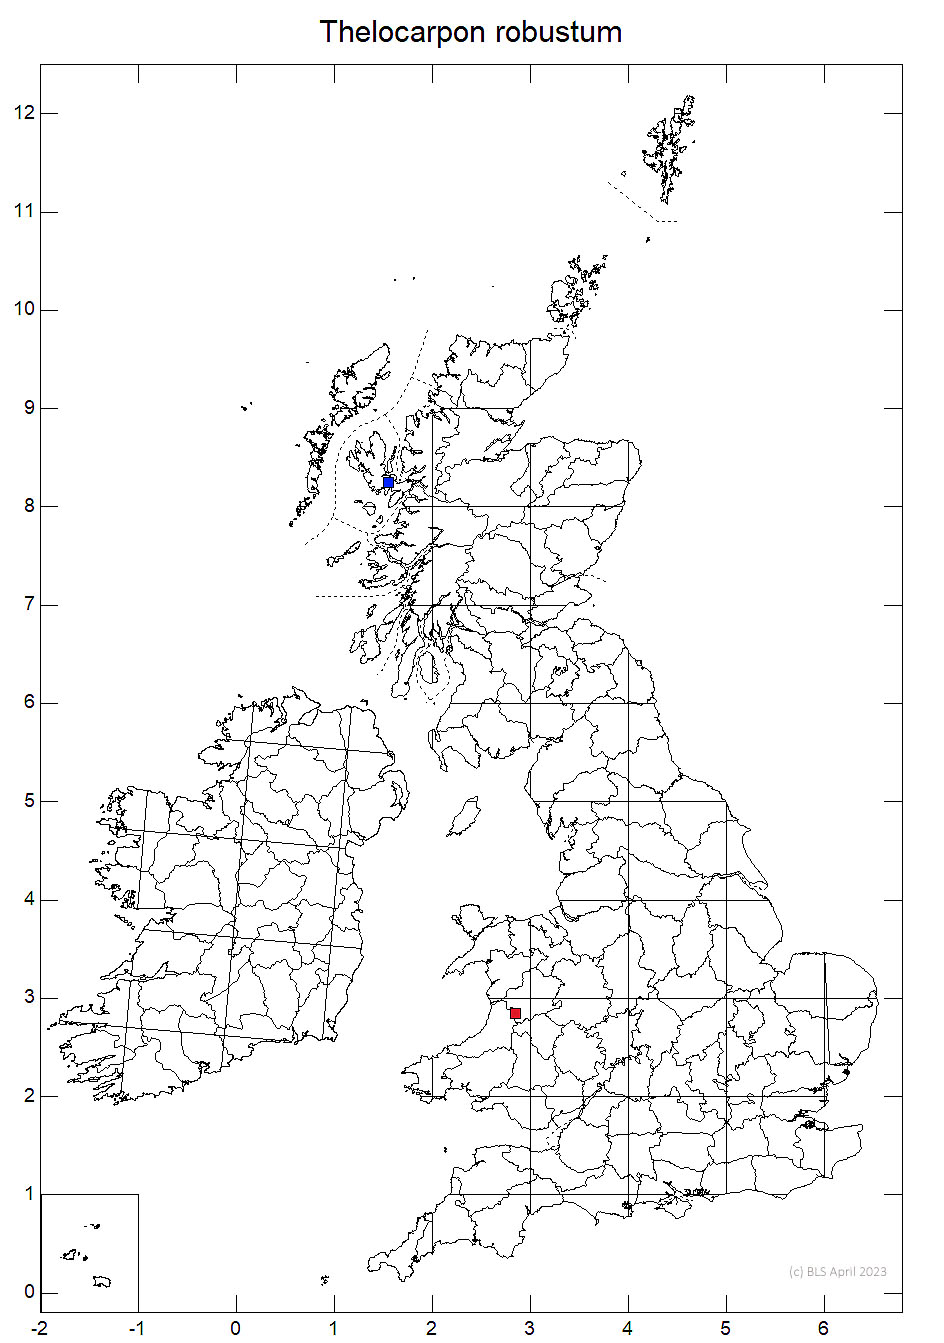 Thelocarpon robustum 10km sq distribution map